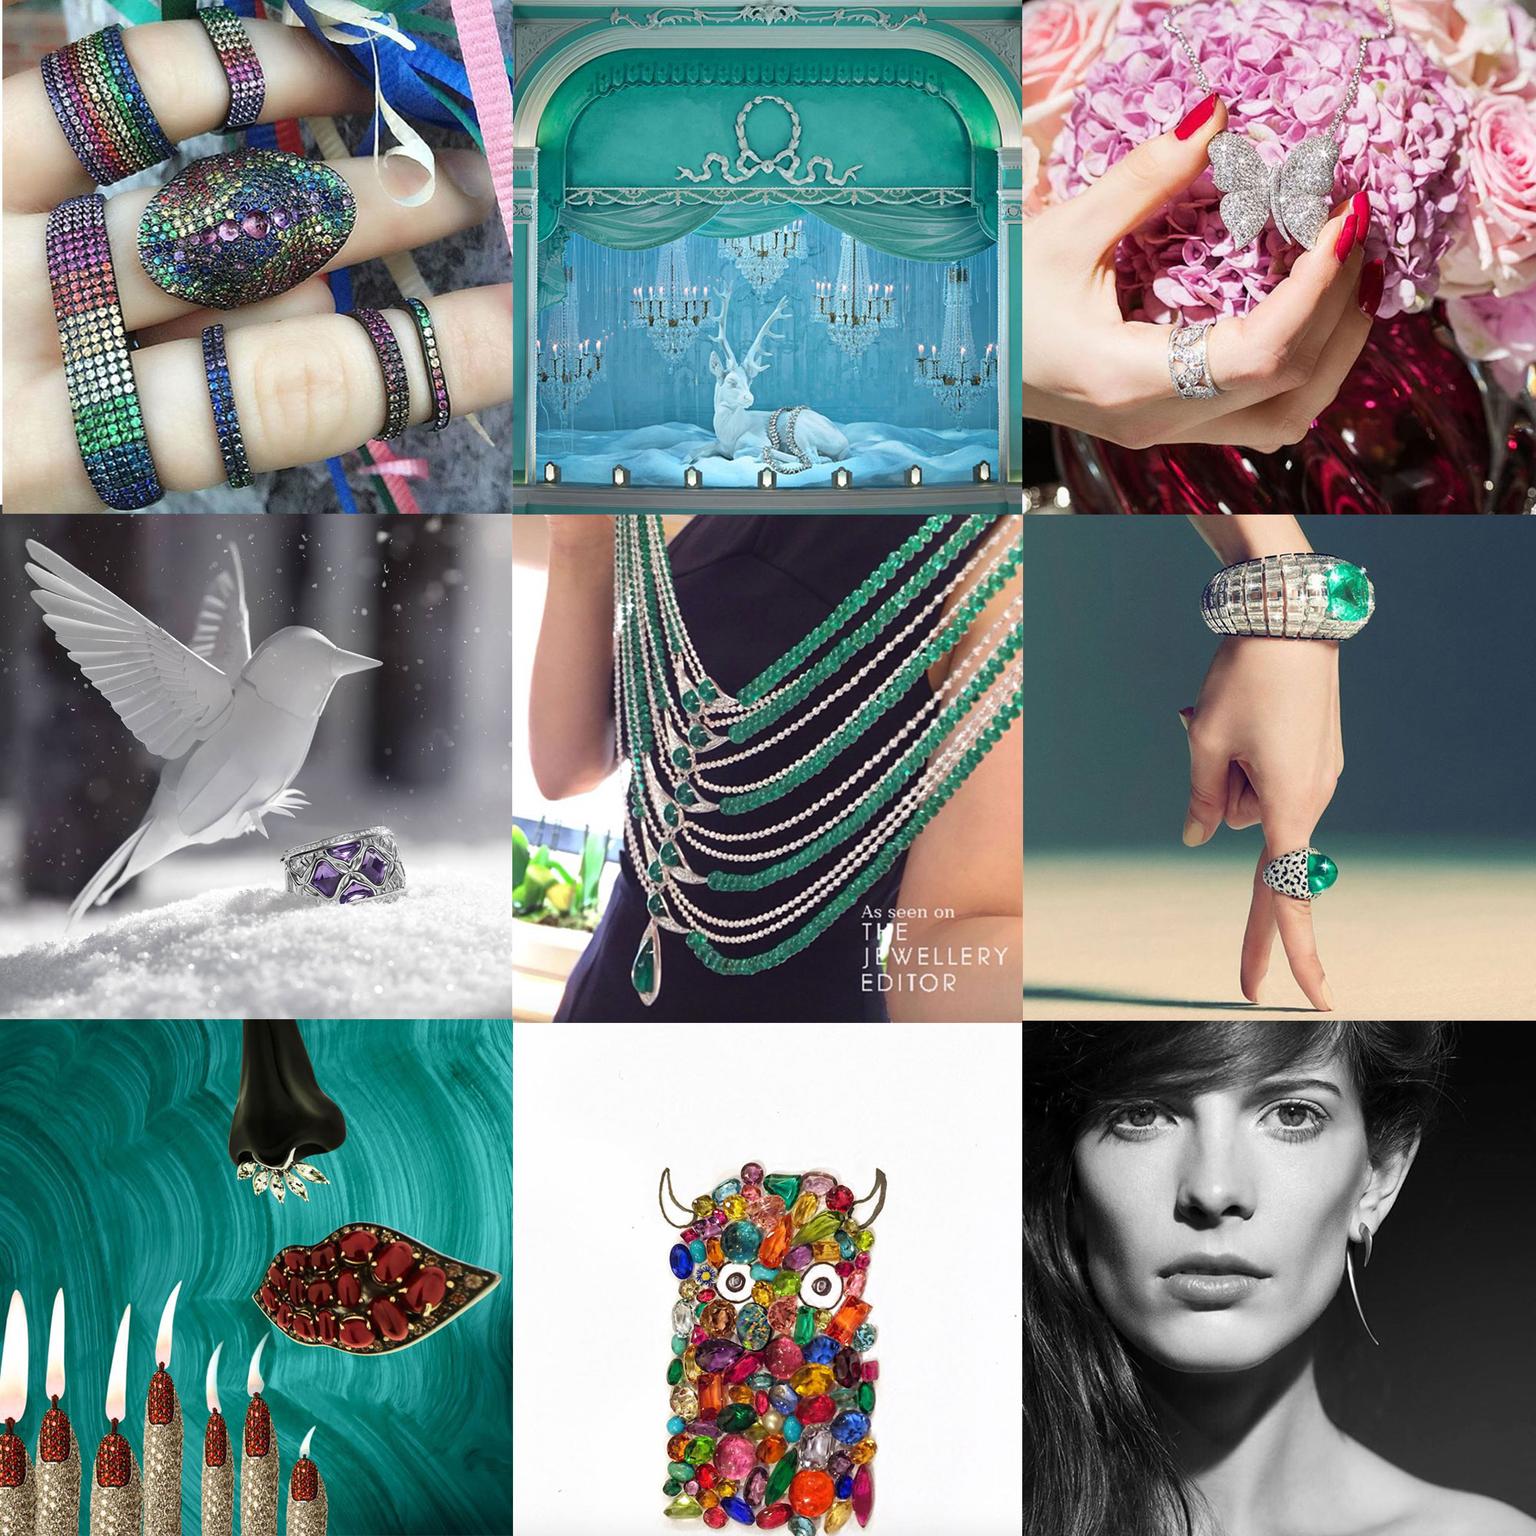 Instagram accounts collage